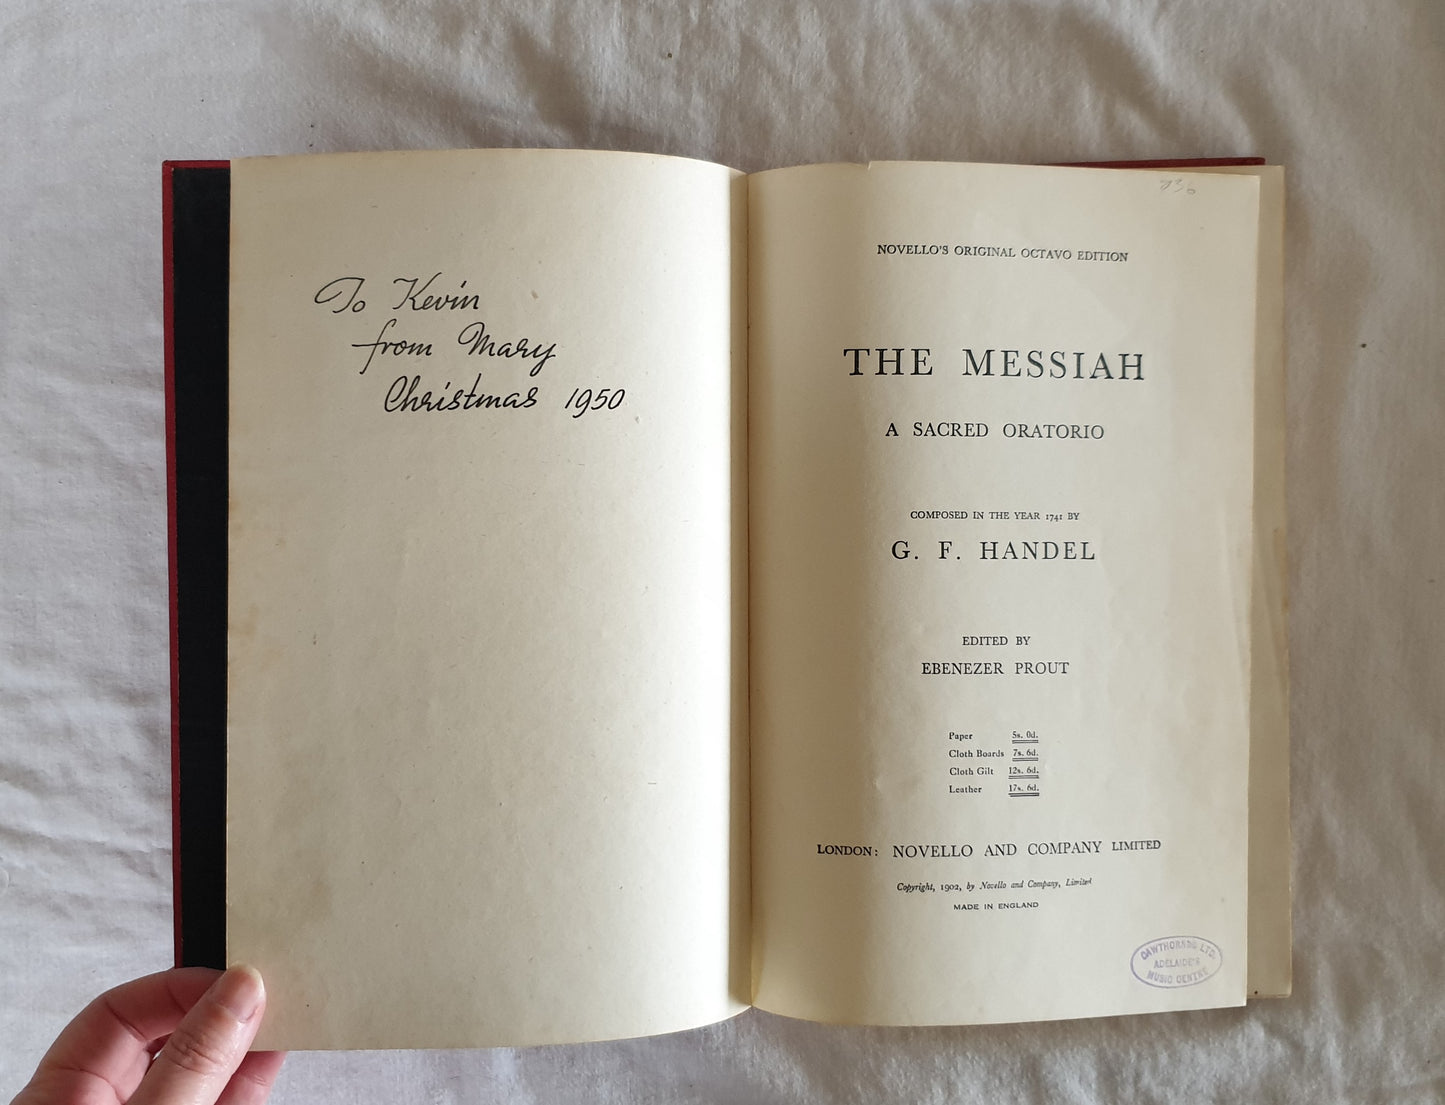 The Messiah by G. F. Handel